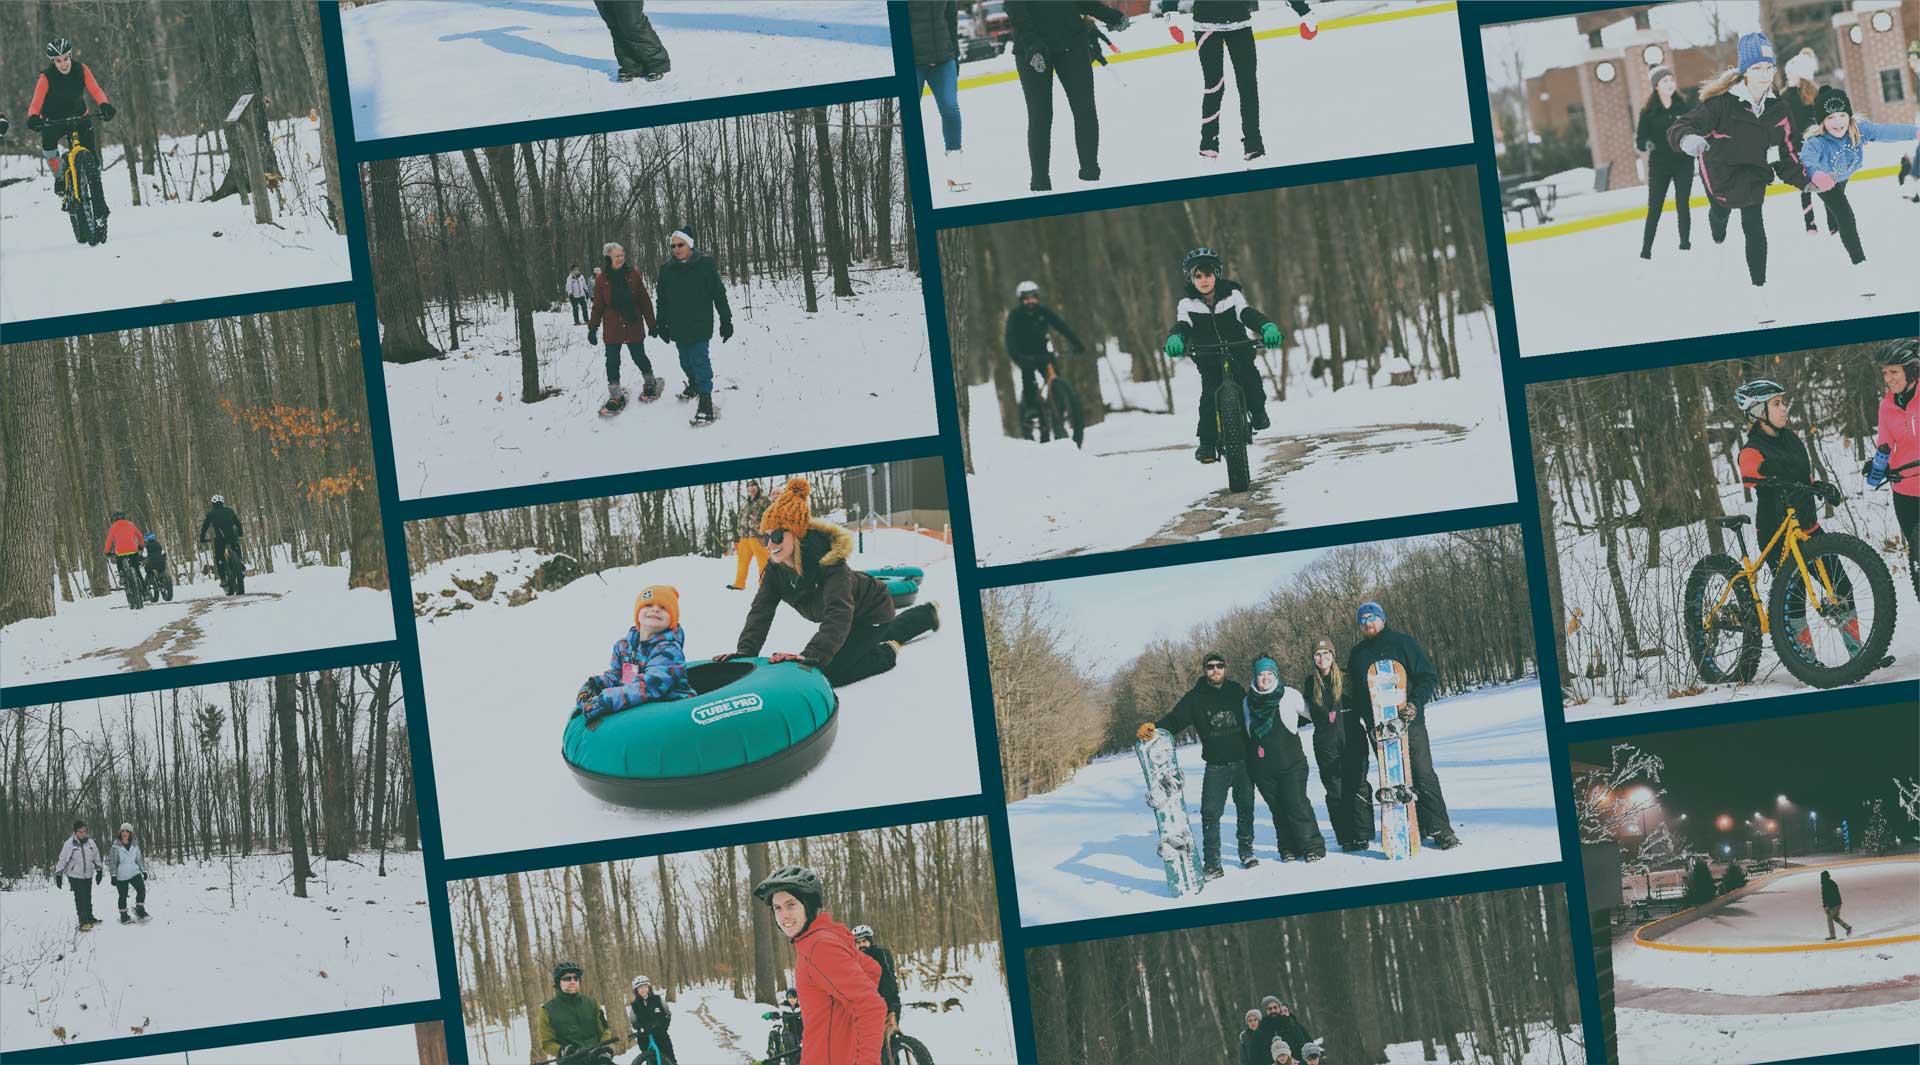 Photo collage of outdoor winter activities